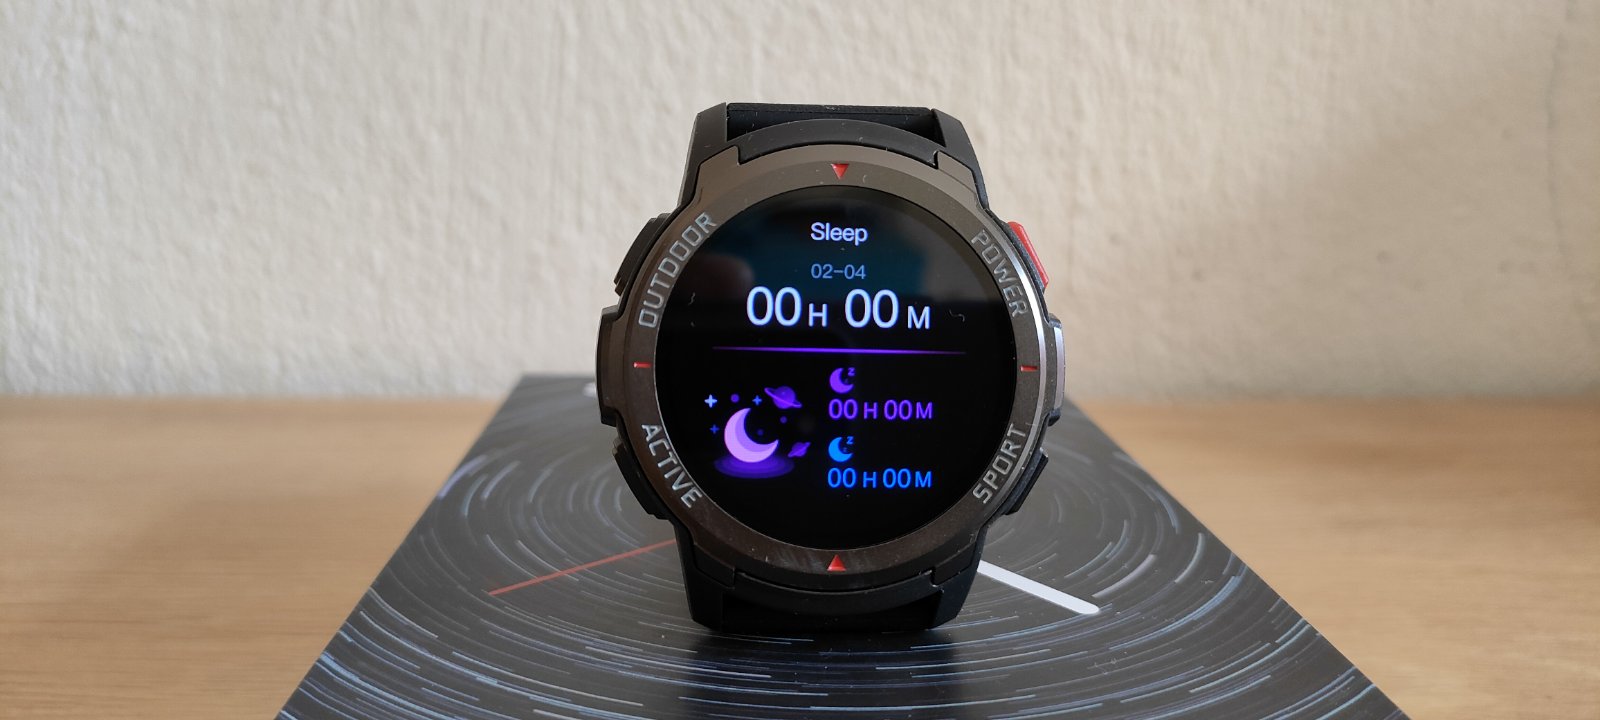 Smartwatch καινούργιo με δυνατότητα συνομιλίας, 100+custom watcfaces, μετρήσεις οξυγόνου, πίεσης